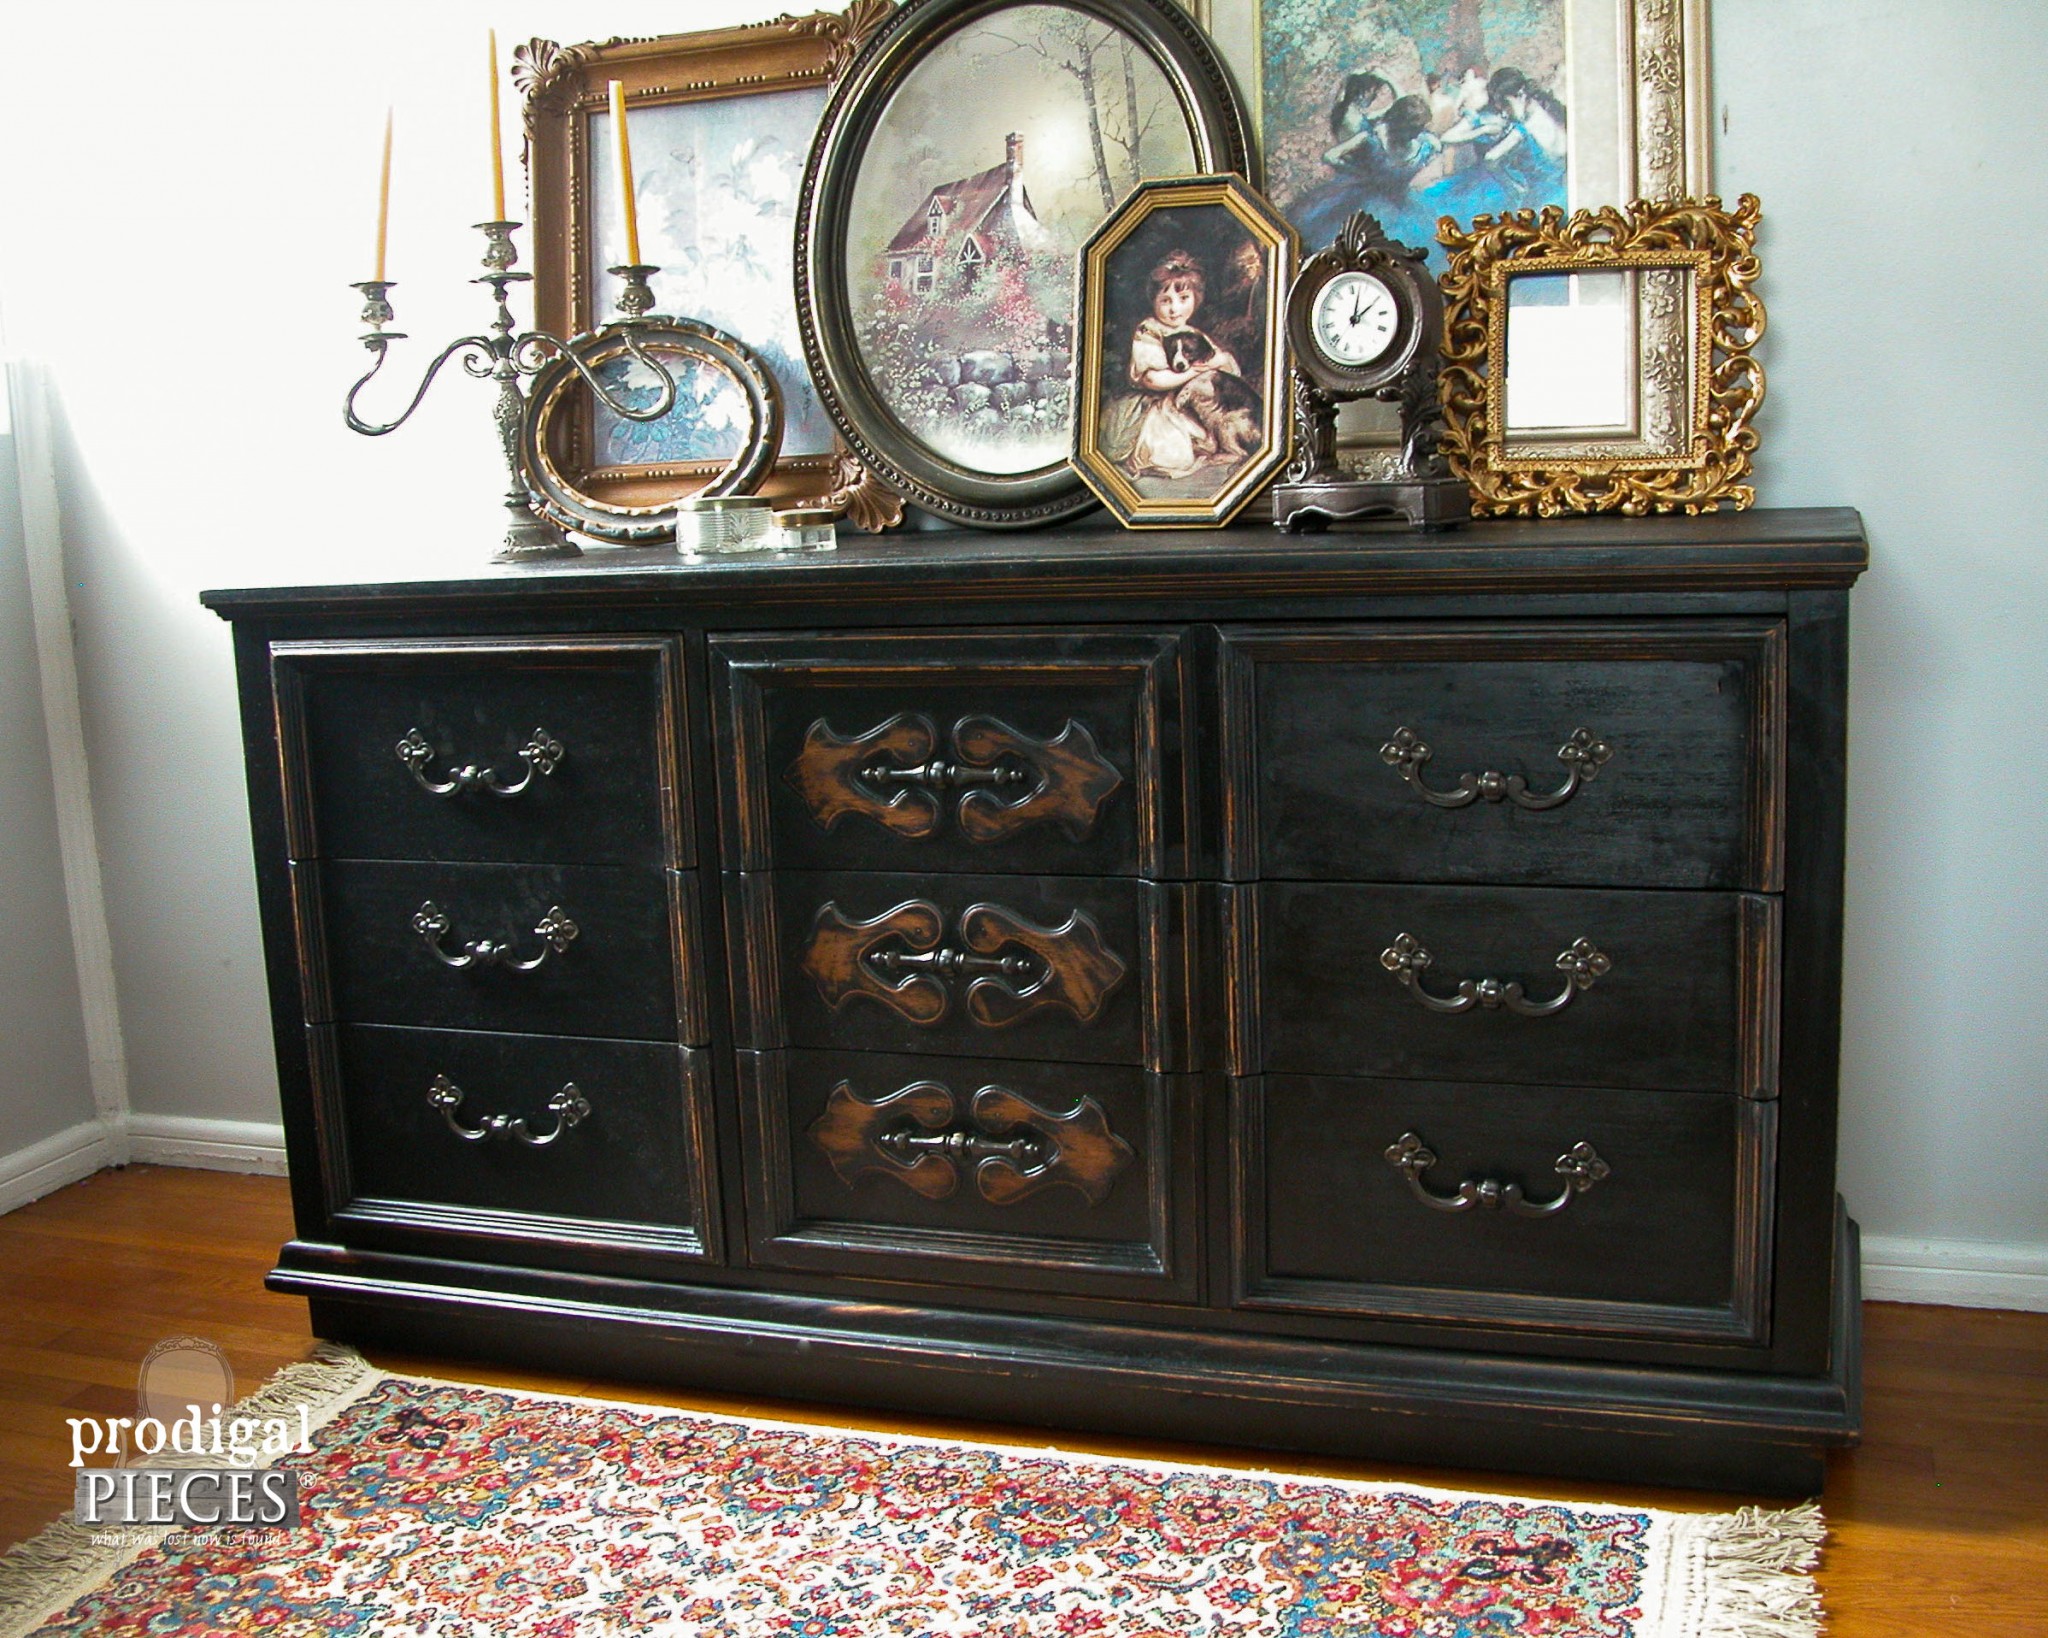 Black Mid Century Modern Dresser - How to Update Furniture | Prodigal Pieces | prodigalpieces.com